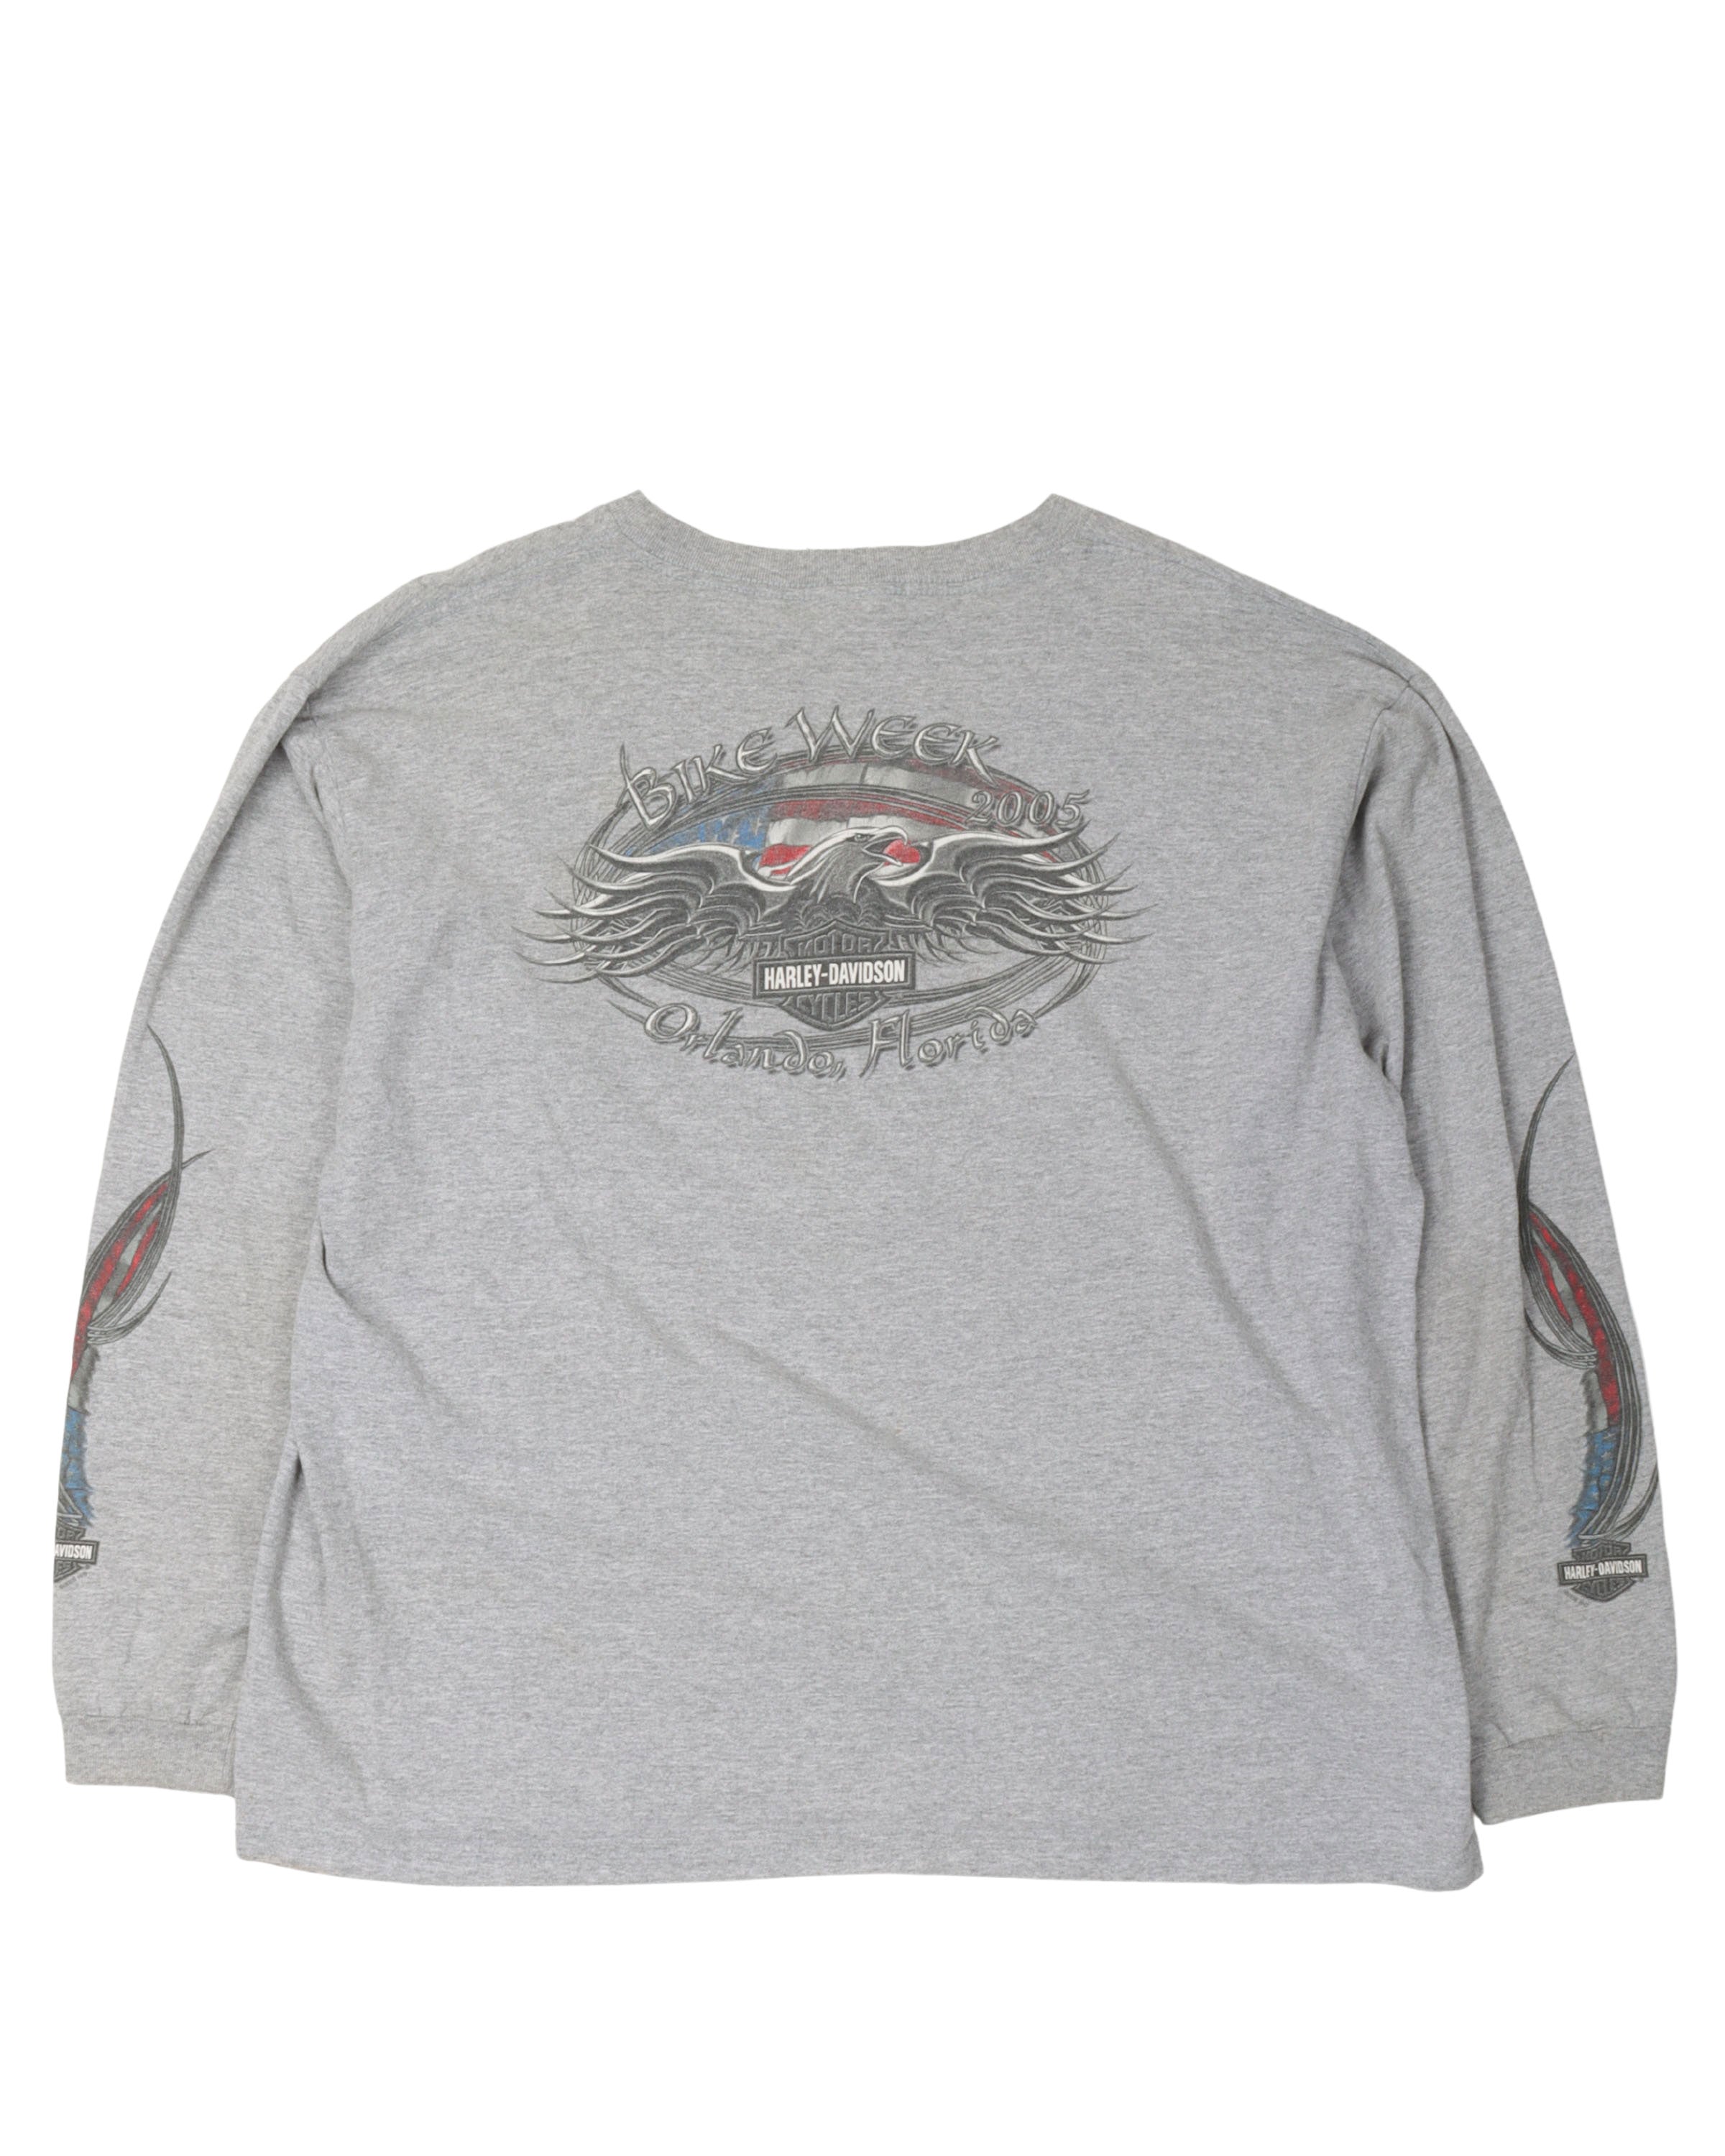 Harley Davidson Orlando Long Sleeve T-Shirt